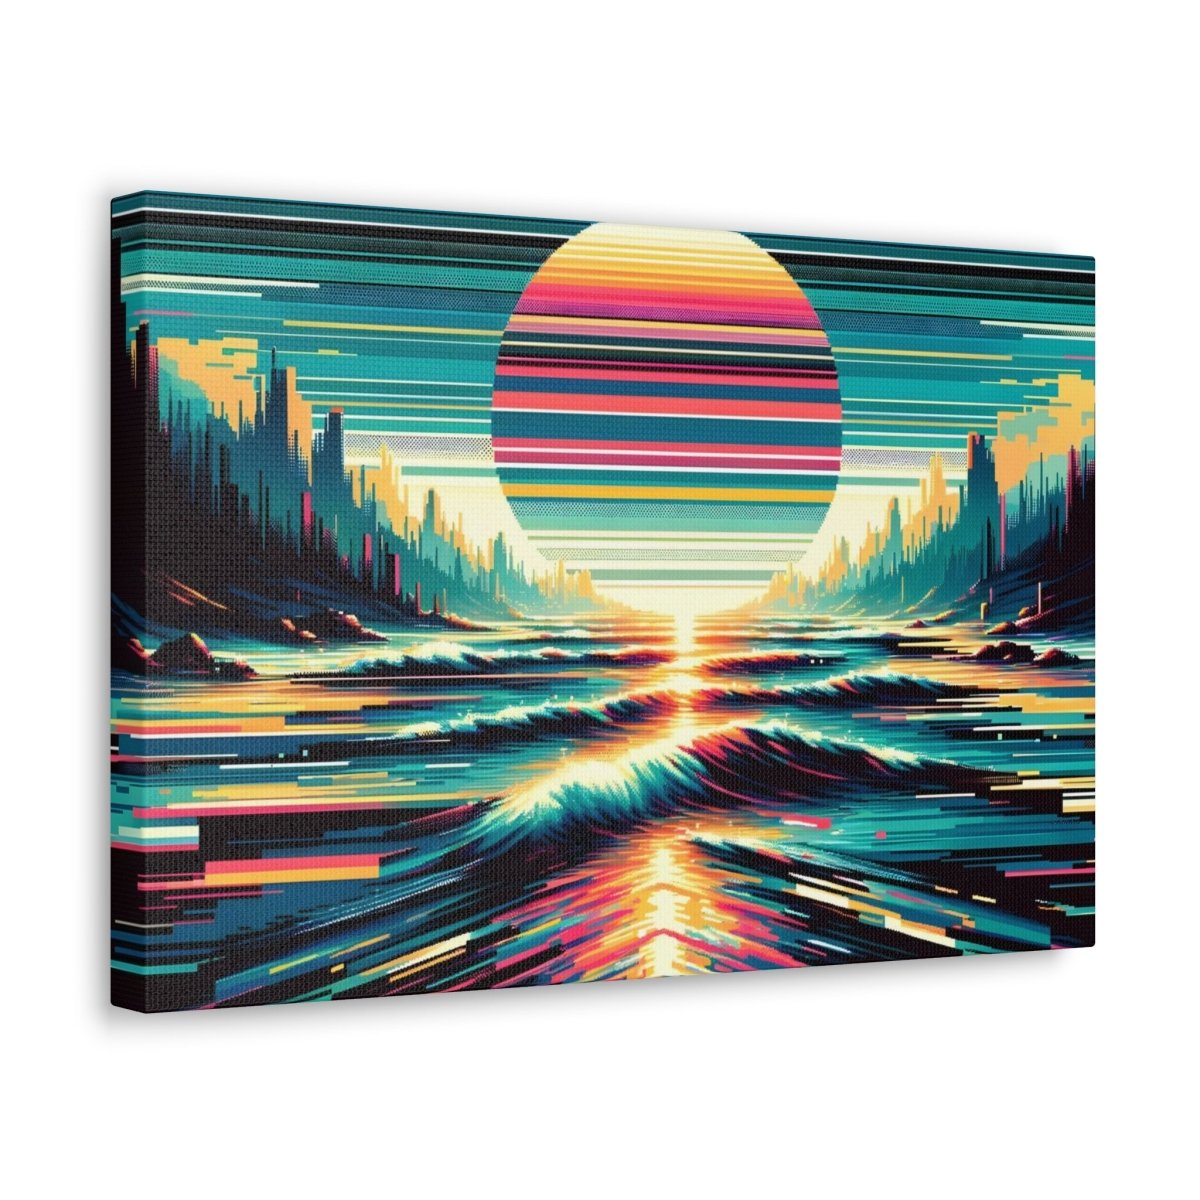 Pixel Serenity Shores - Glitch Wall Art - Neodigitalis Artimata